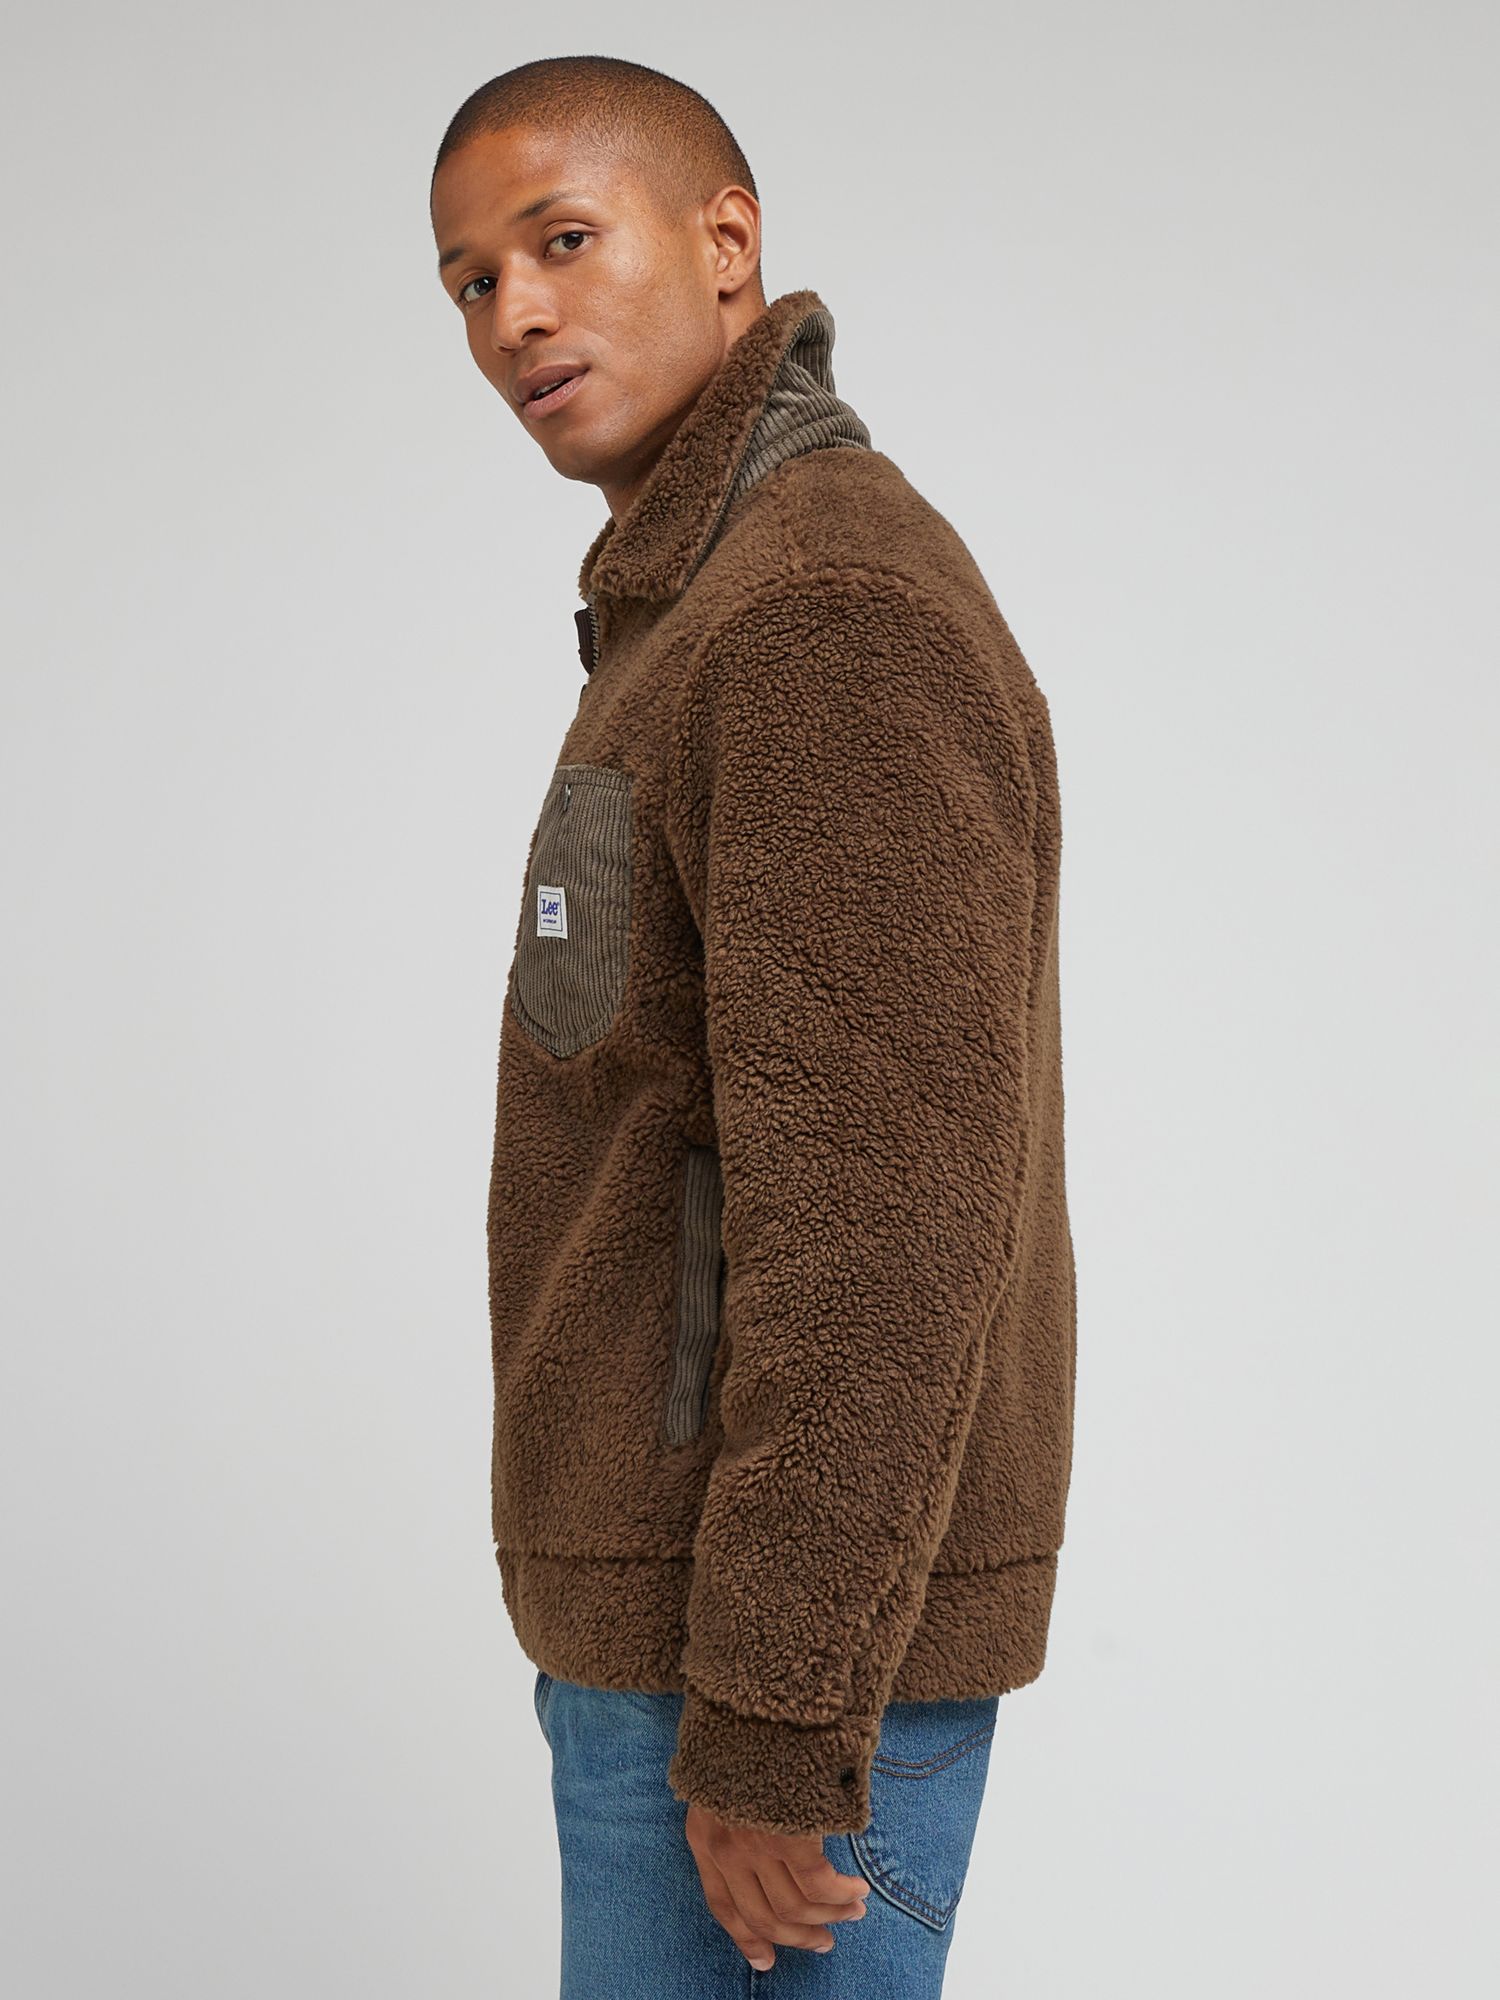 Buy Lee Sherpa Regular Fit Zip Through Jacket, Truffle Online at johnlewis.com